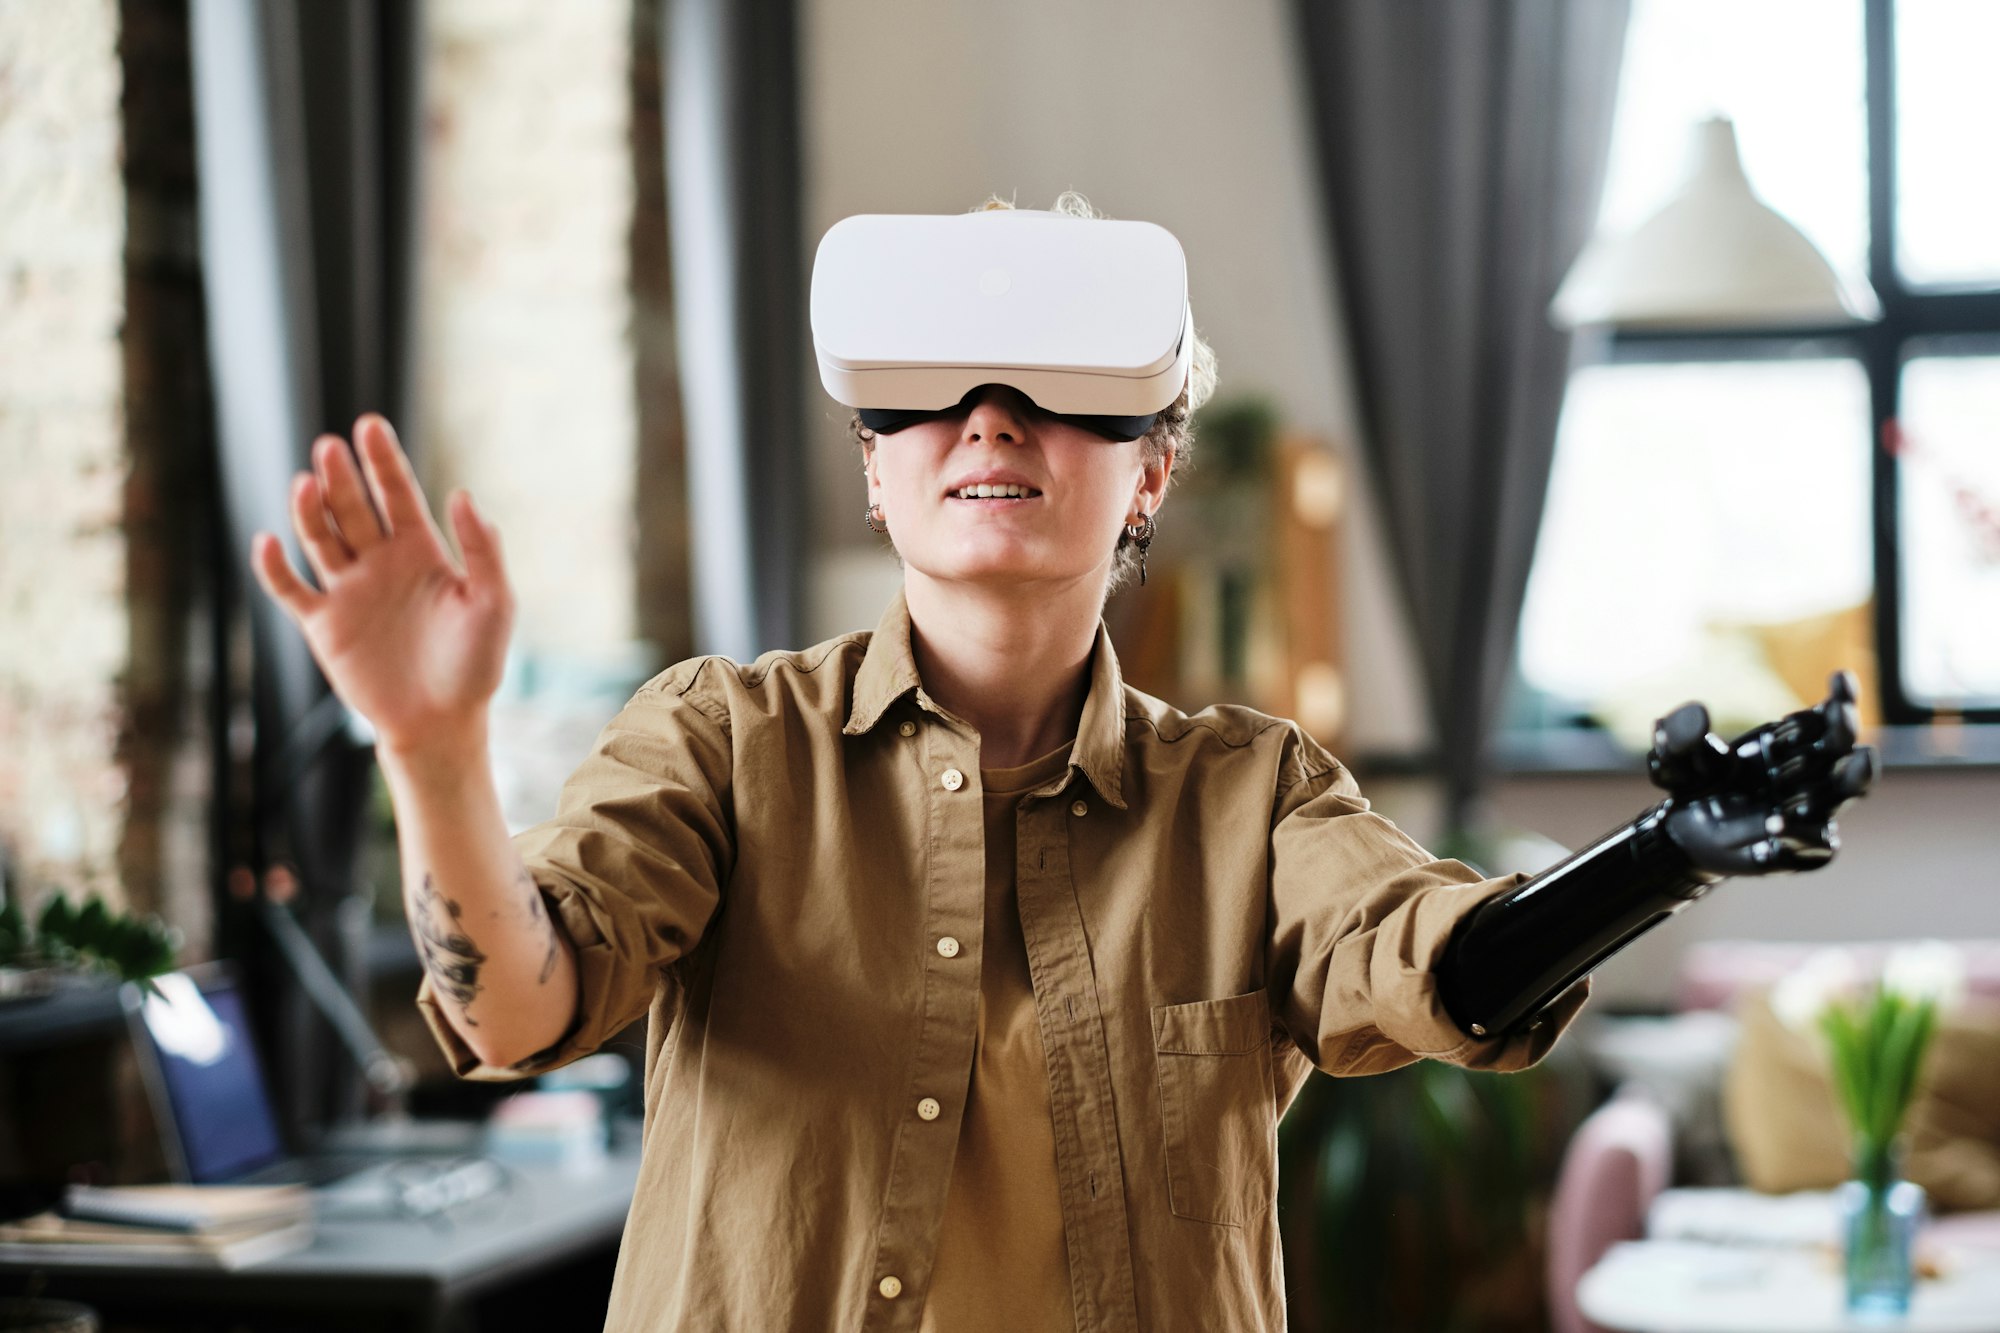 Girl with prosthesis playing virtual reality game